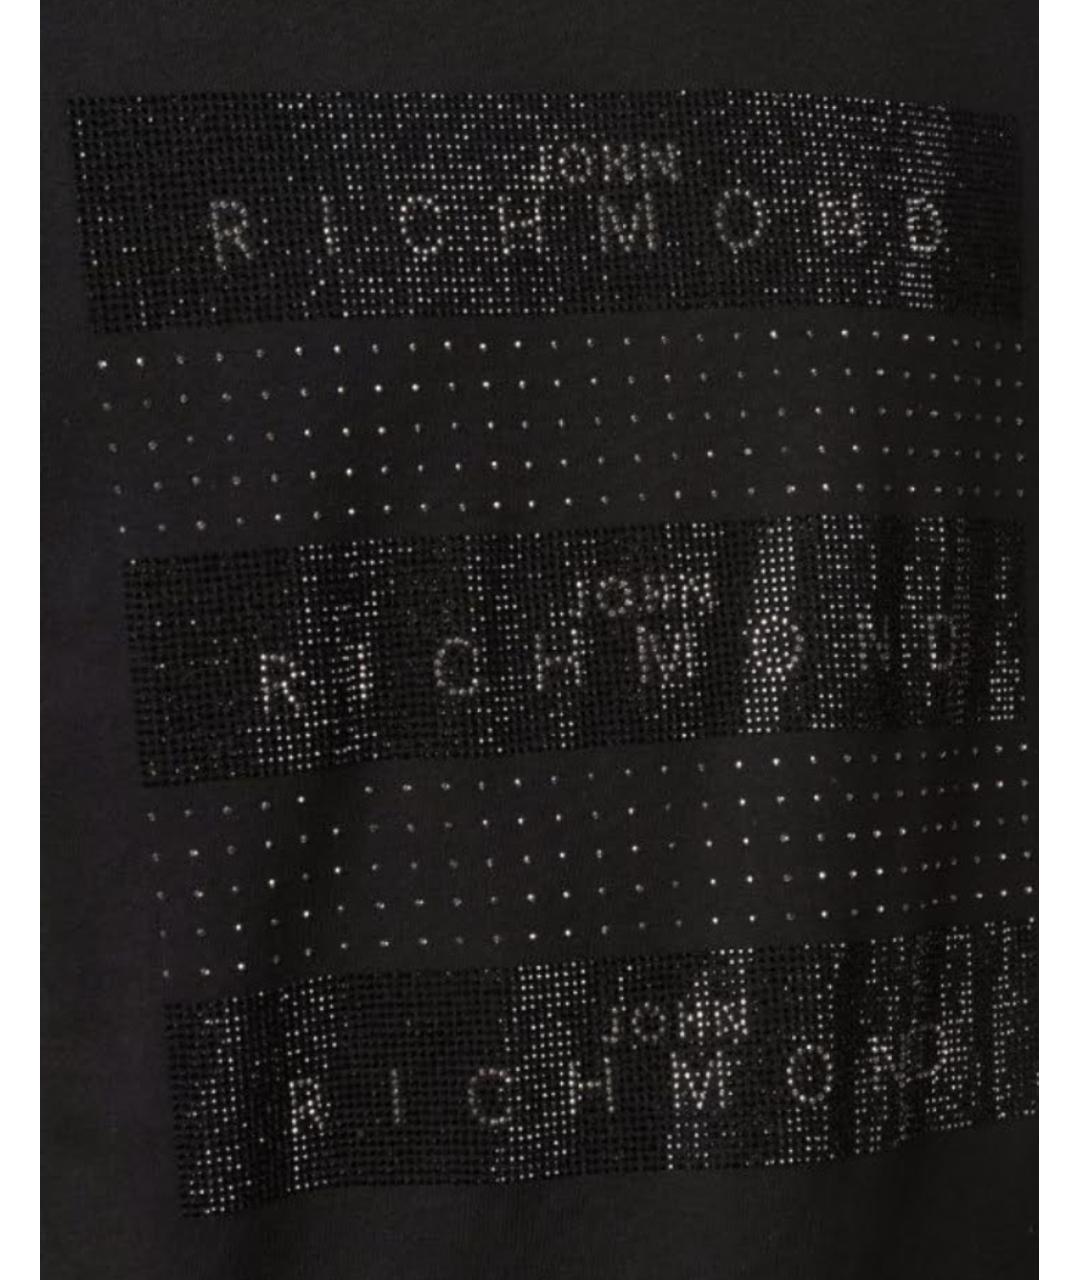 JOHN RICHMOND Черная хлопковая футболка, фото 4